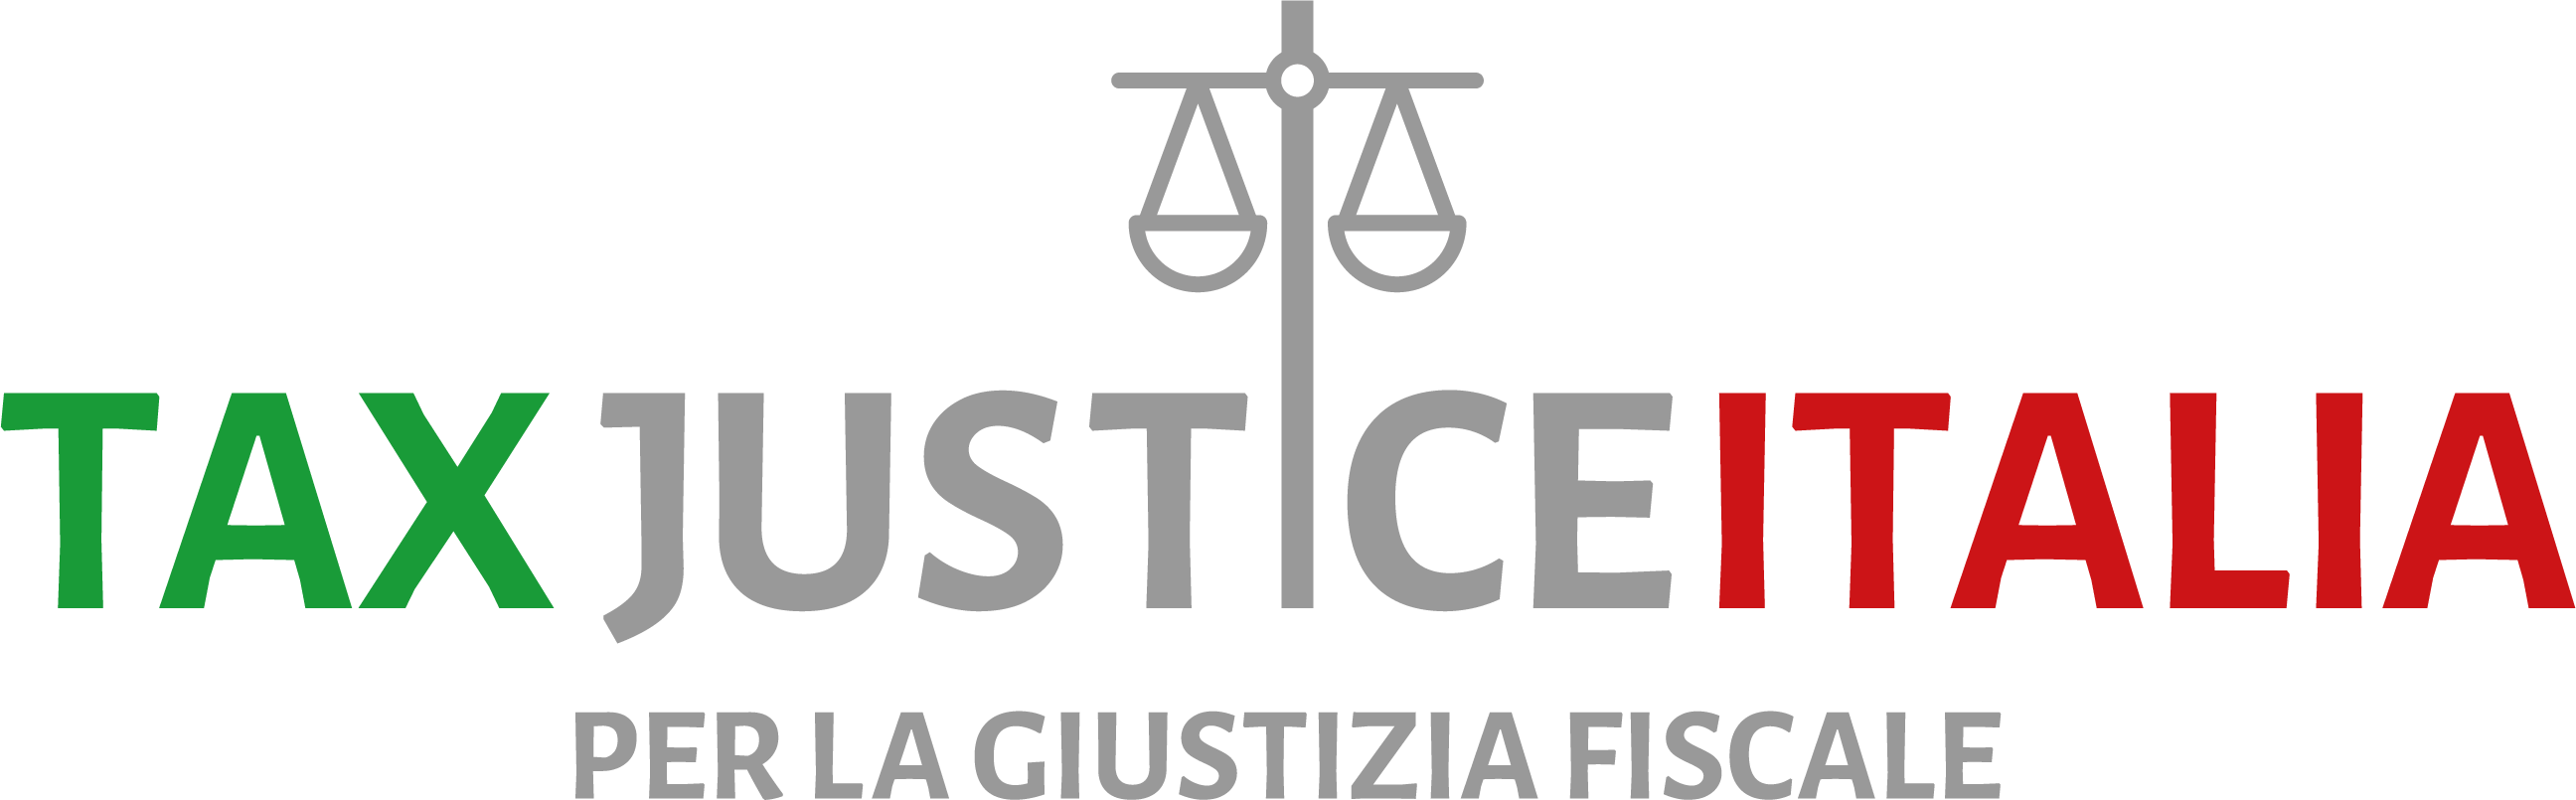 Tax Justice Italia